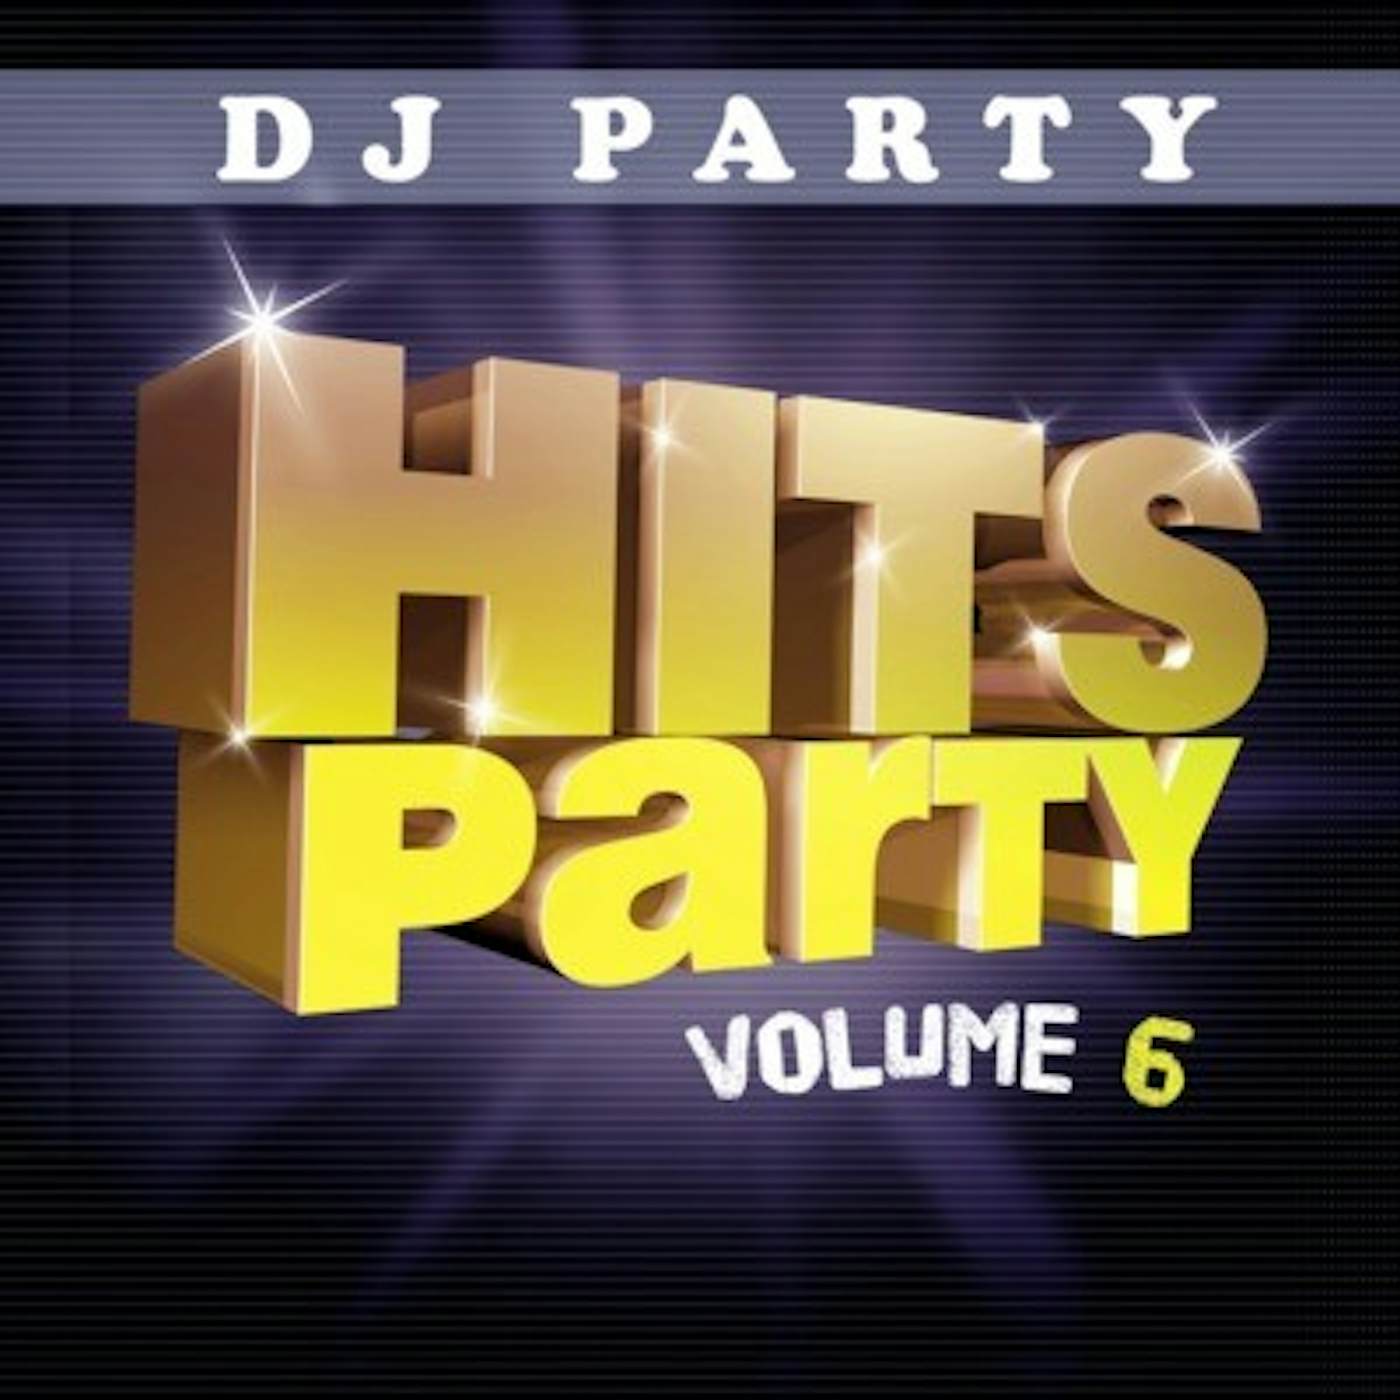 DJ Party HITS PARTY VOL. 6 CD